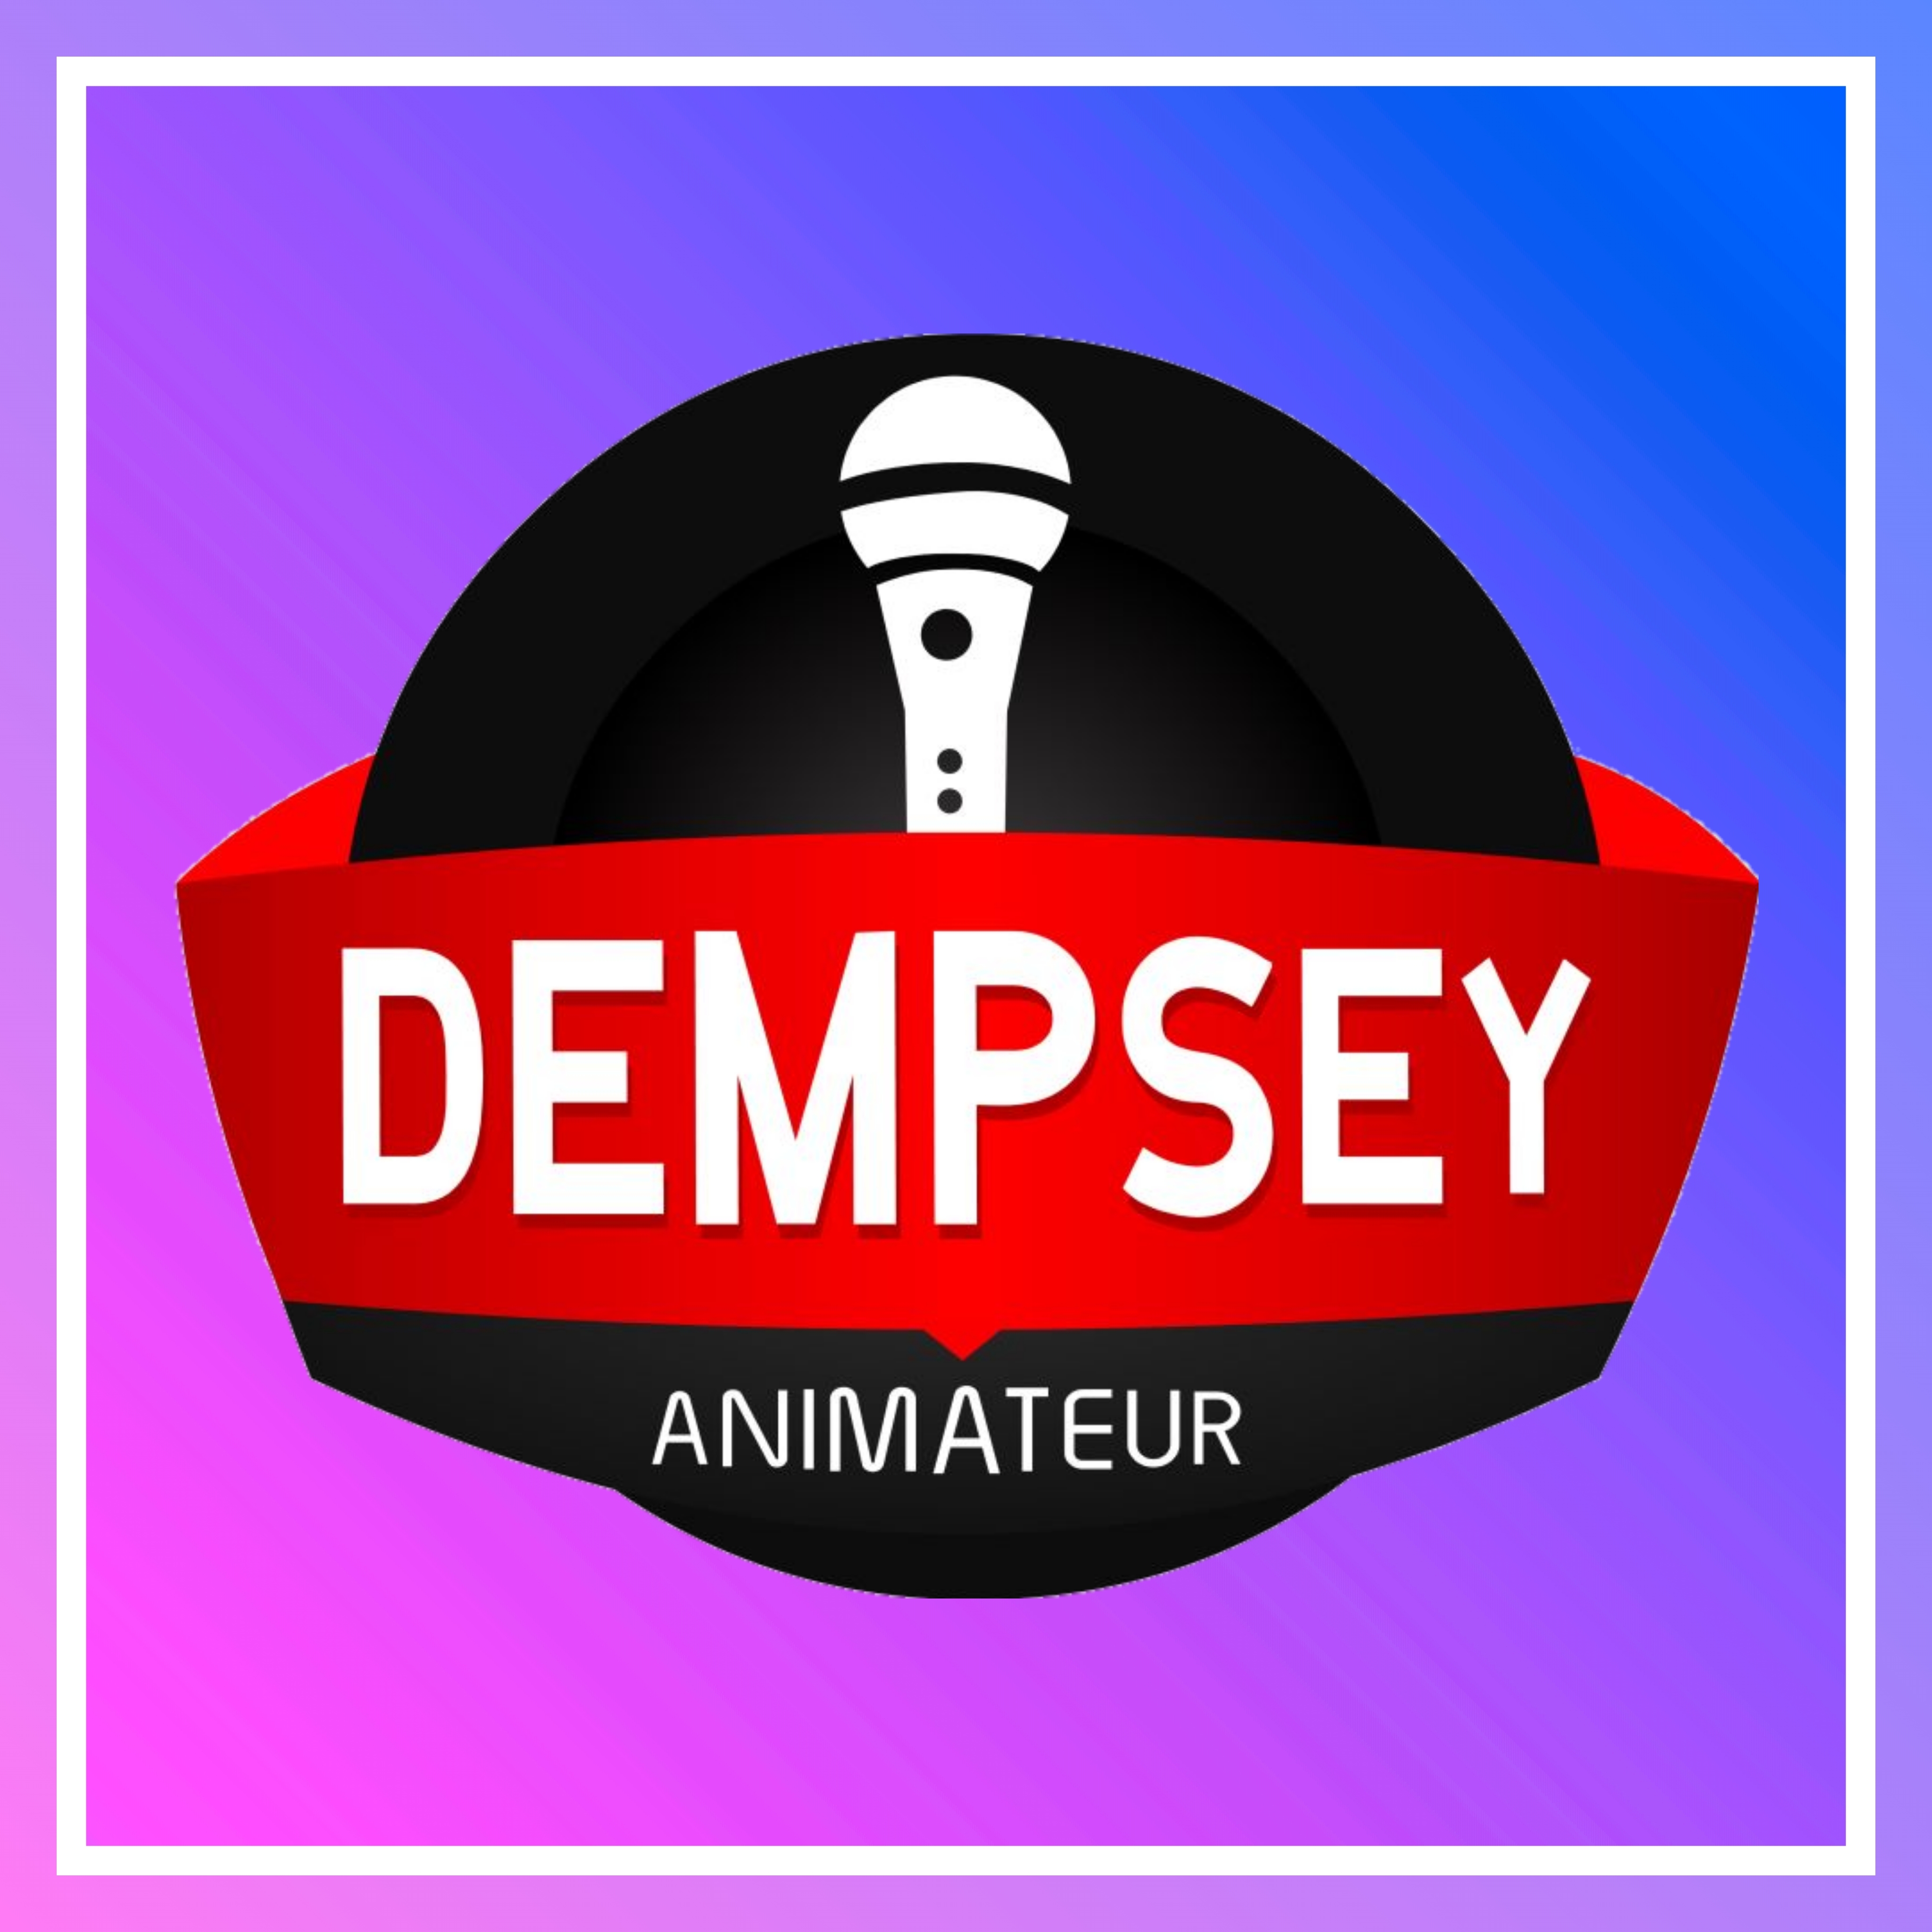 Dempsey 